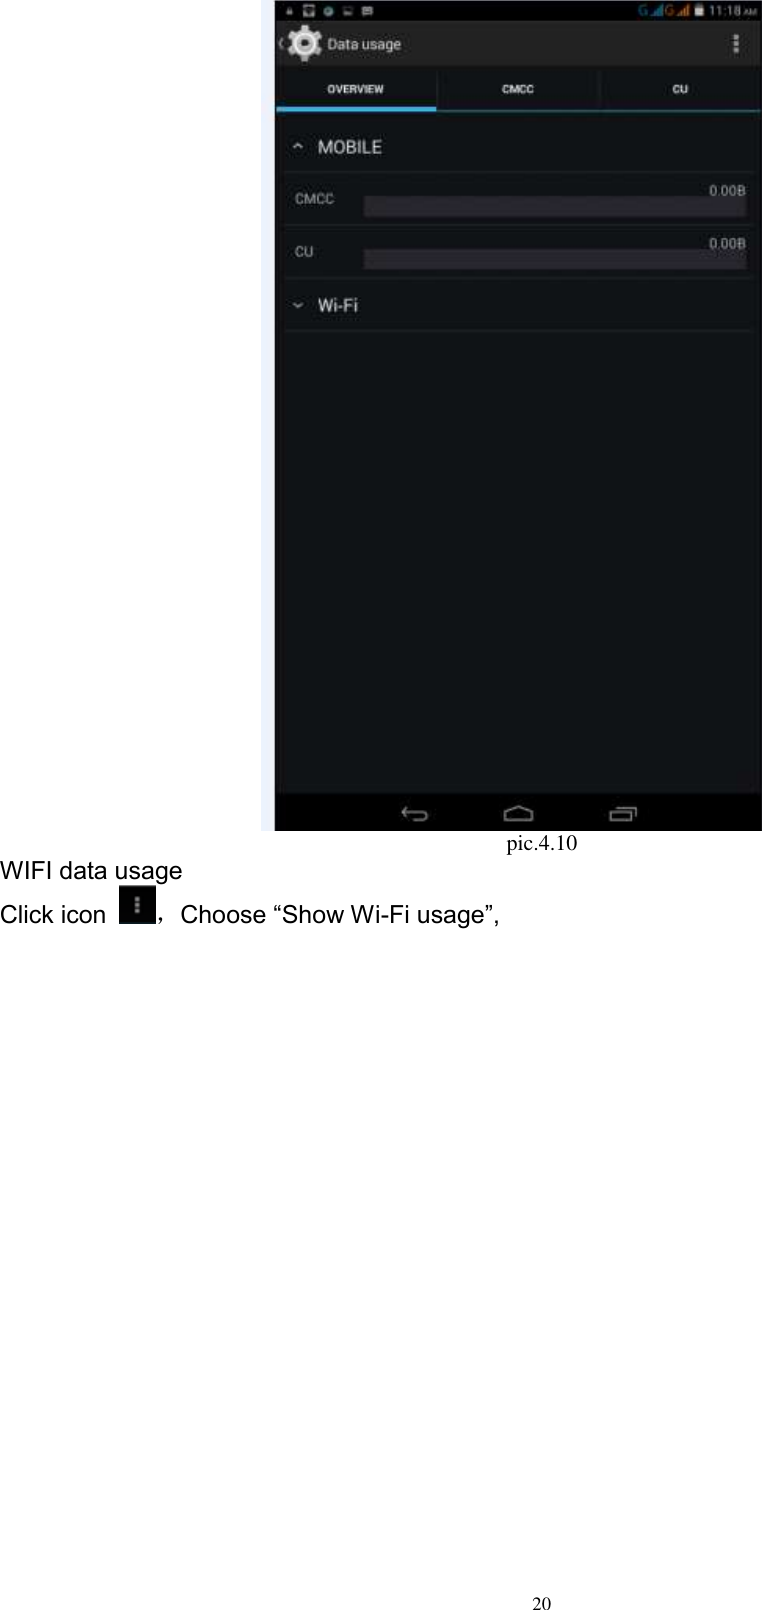      20  pic.4.10 WIFI data usage Click icon  ，Choose “Show Wi-Fi usage”, 